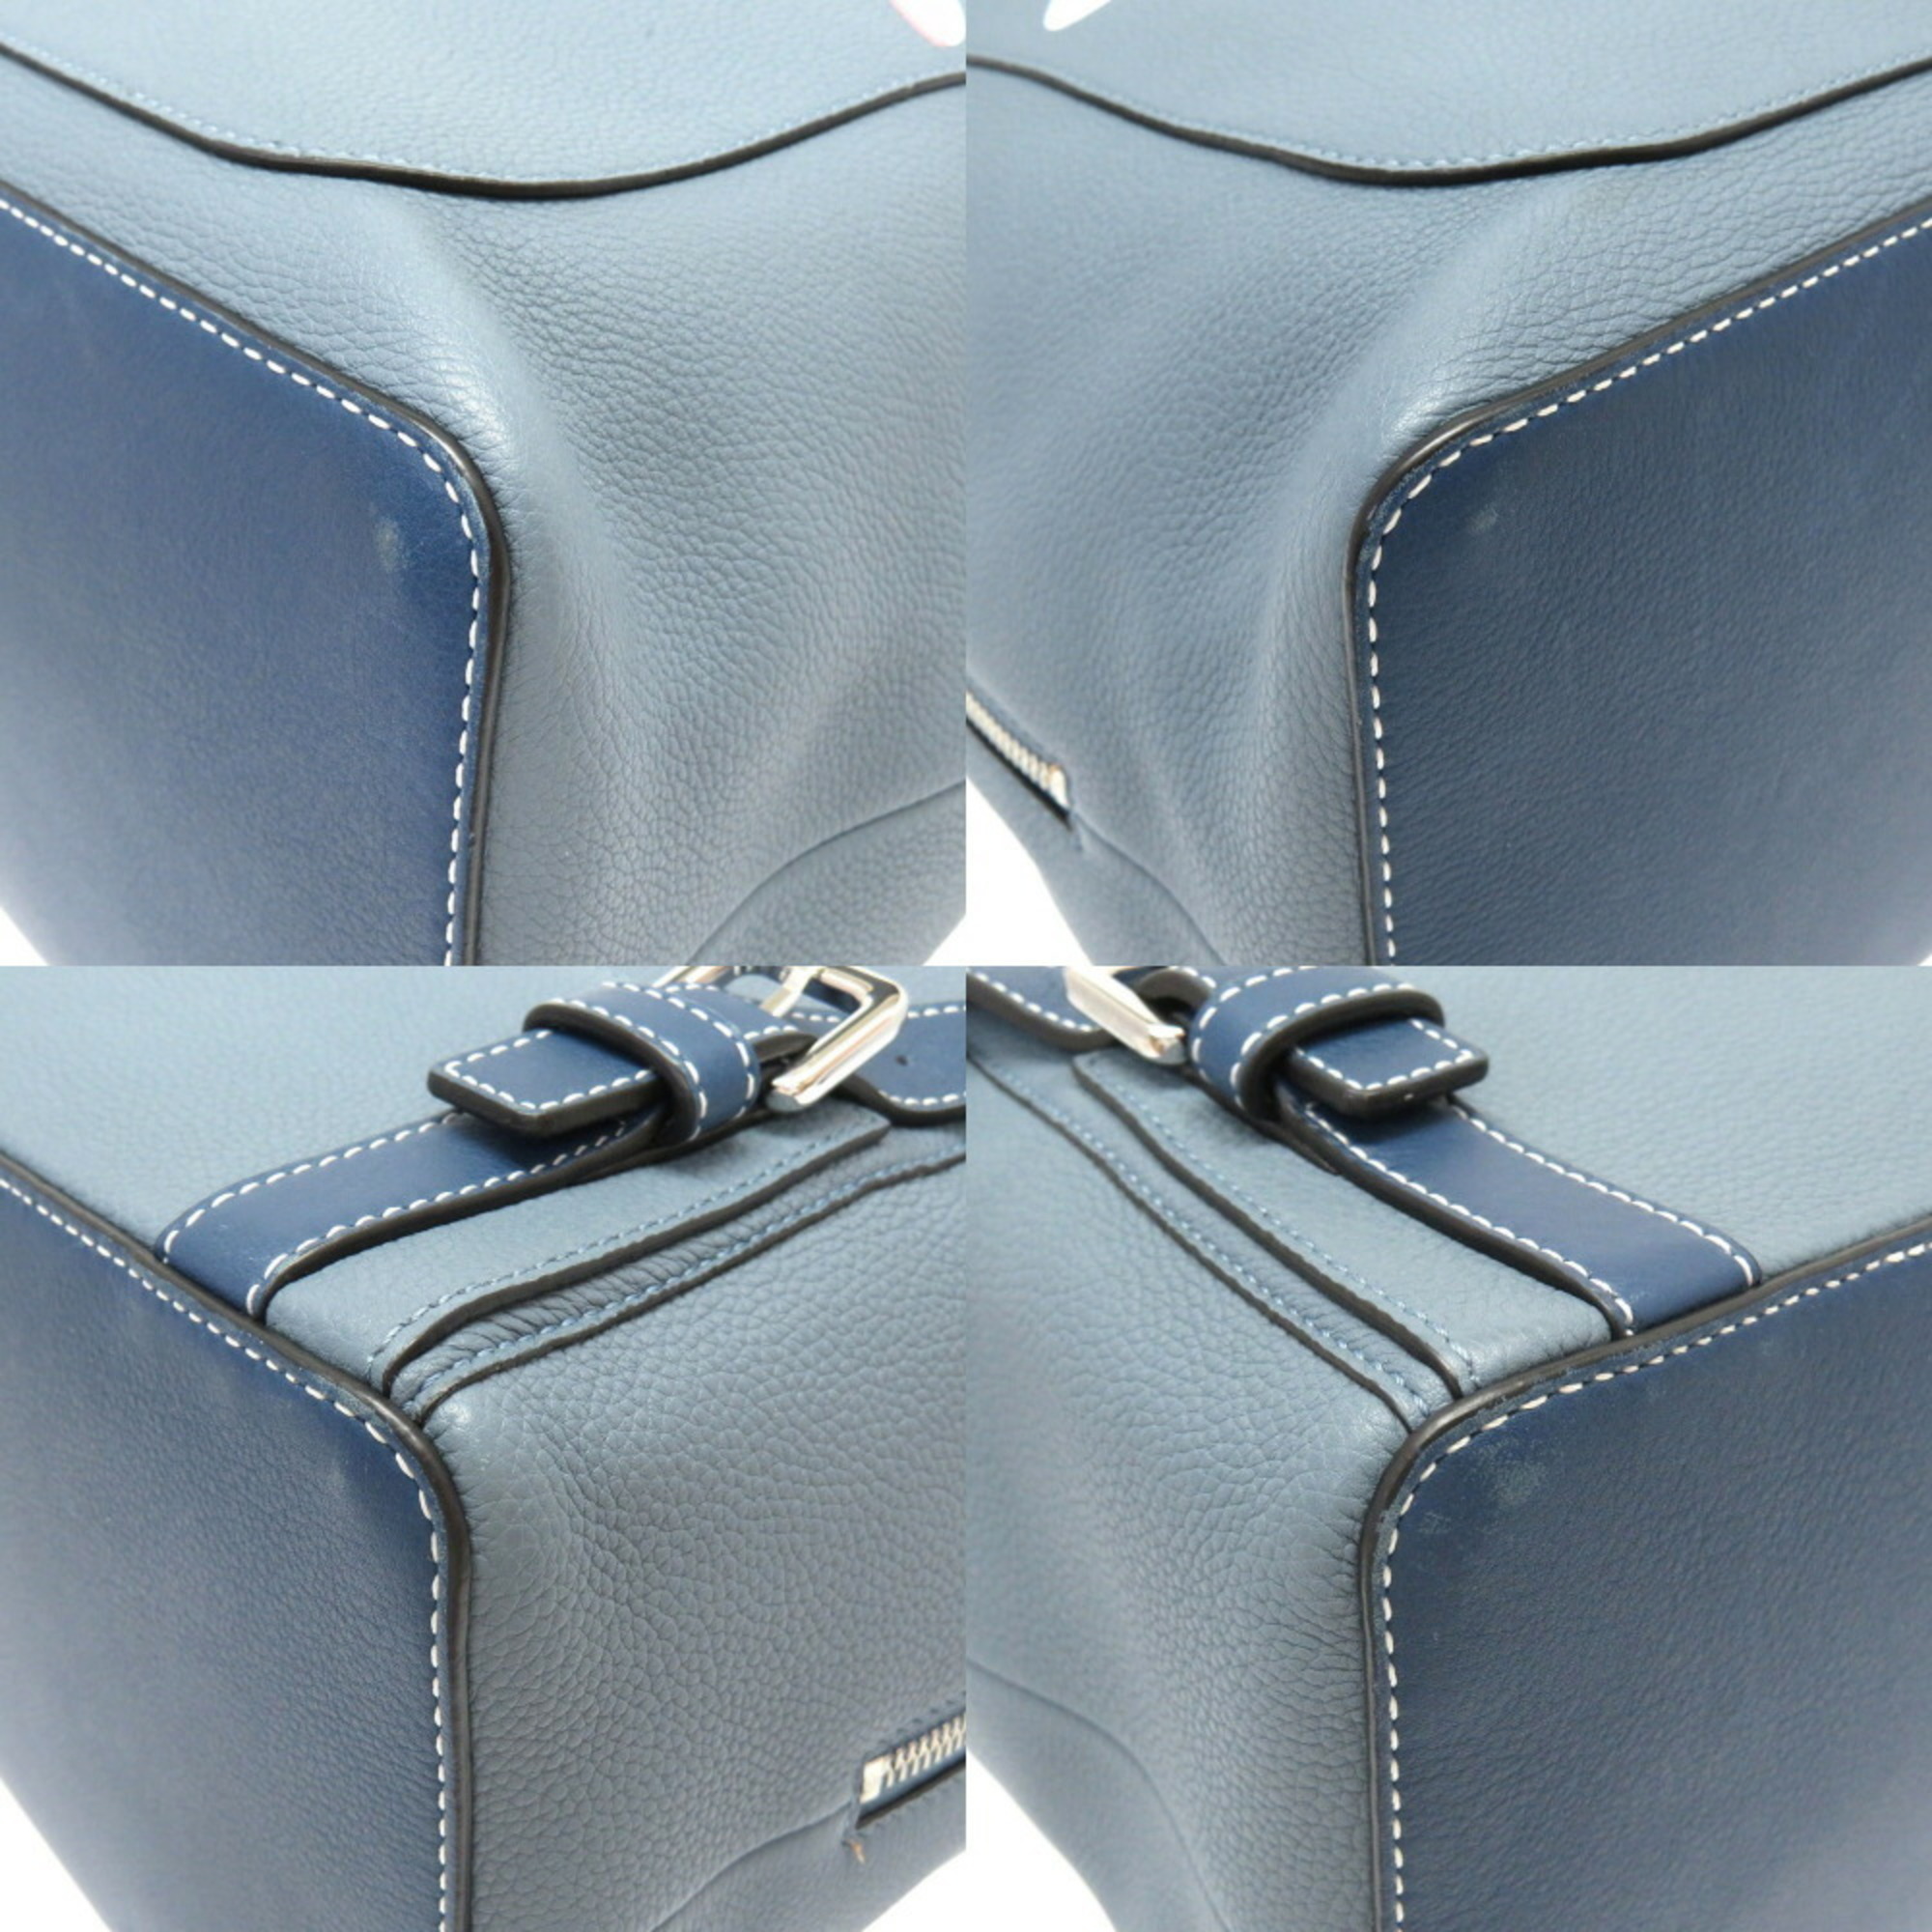 Loewe Dumbo Disney Capsule Collection Leather Blue Rucksack Backpack Limited 0004 LOEWE